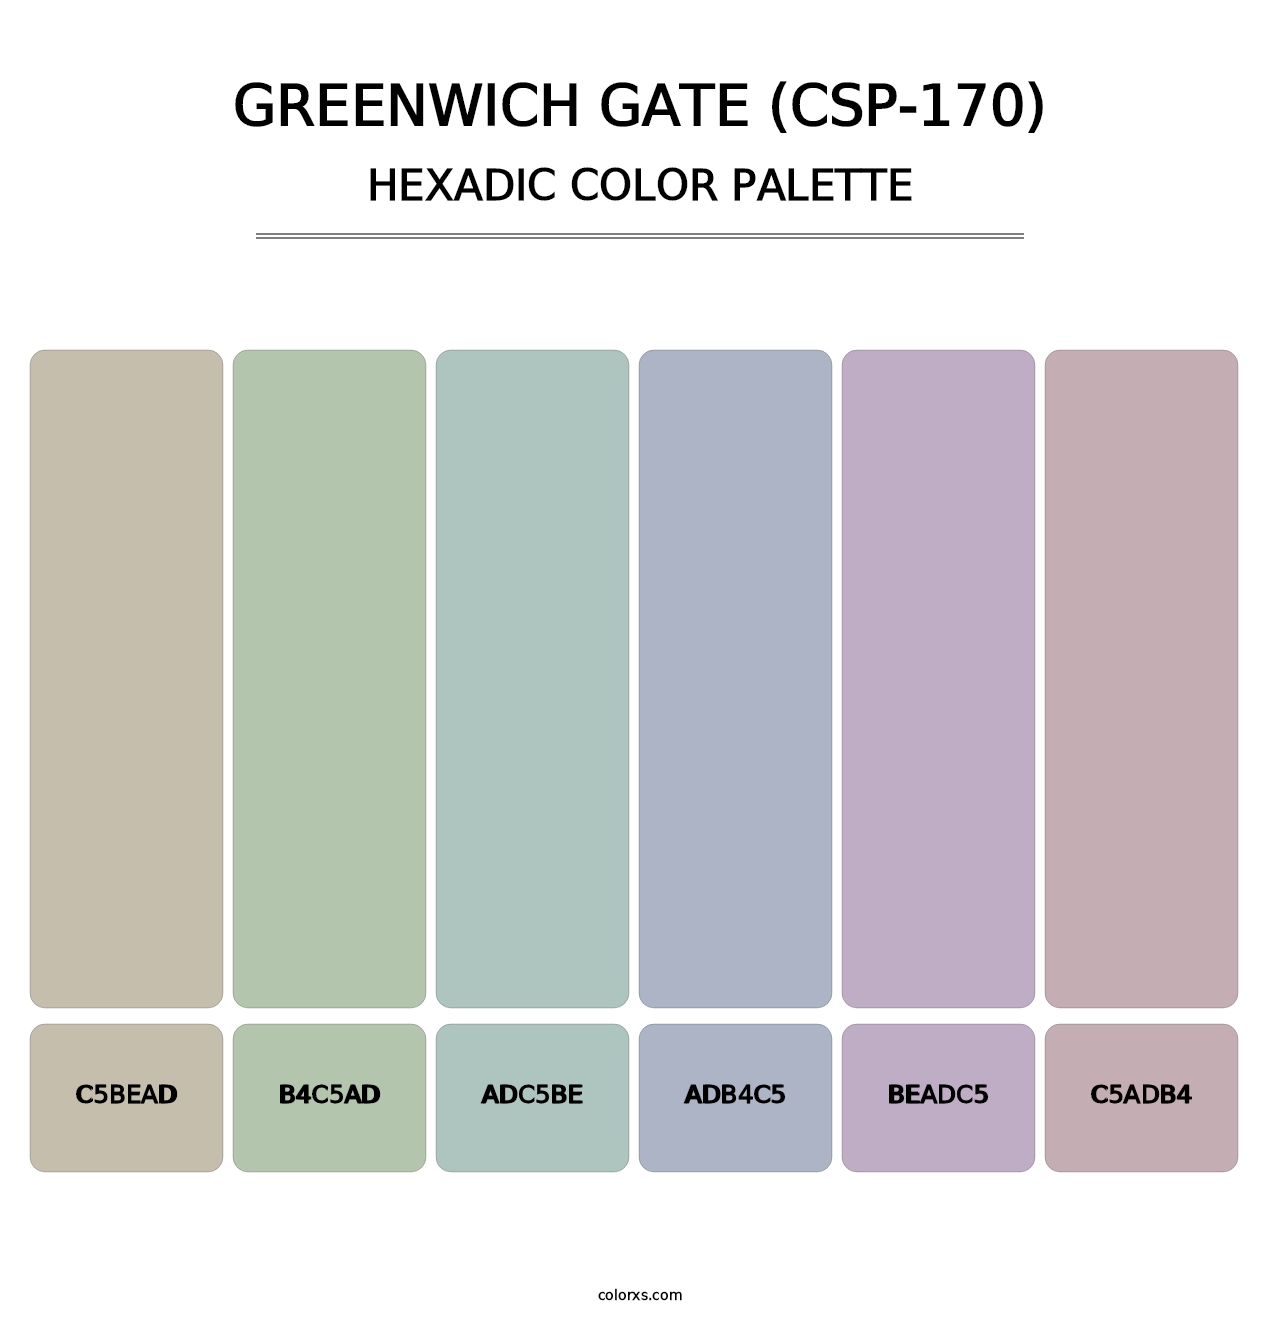 Greenwich Gate (CSP-170) - Hexadic Color Palette